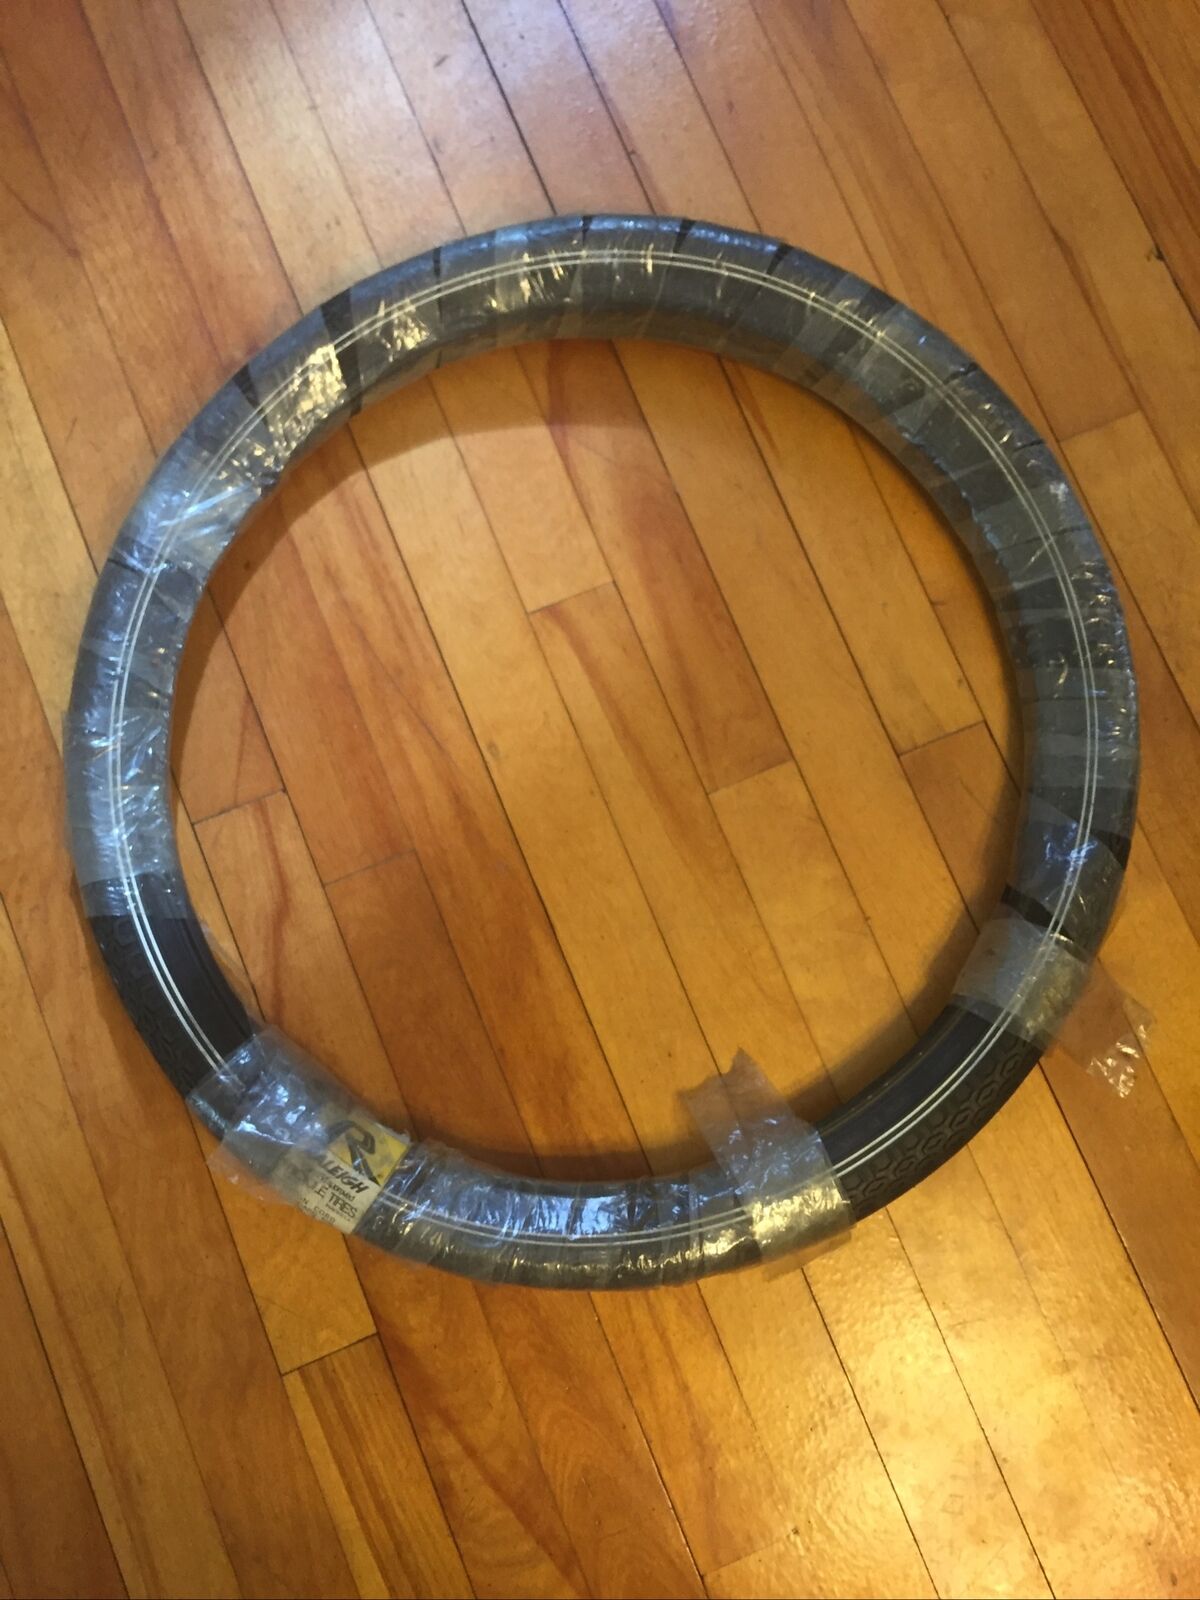 Pair Of Raleigh Gold Dot 24”x1.75” NOS Bicycle Tires - White Stripe